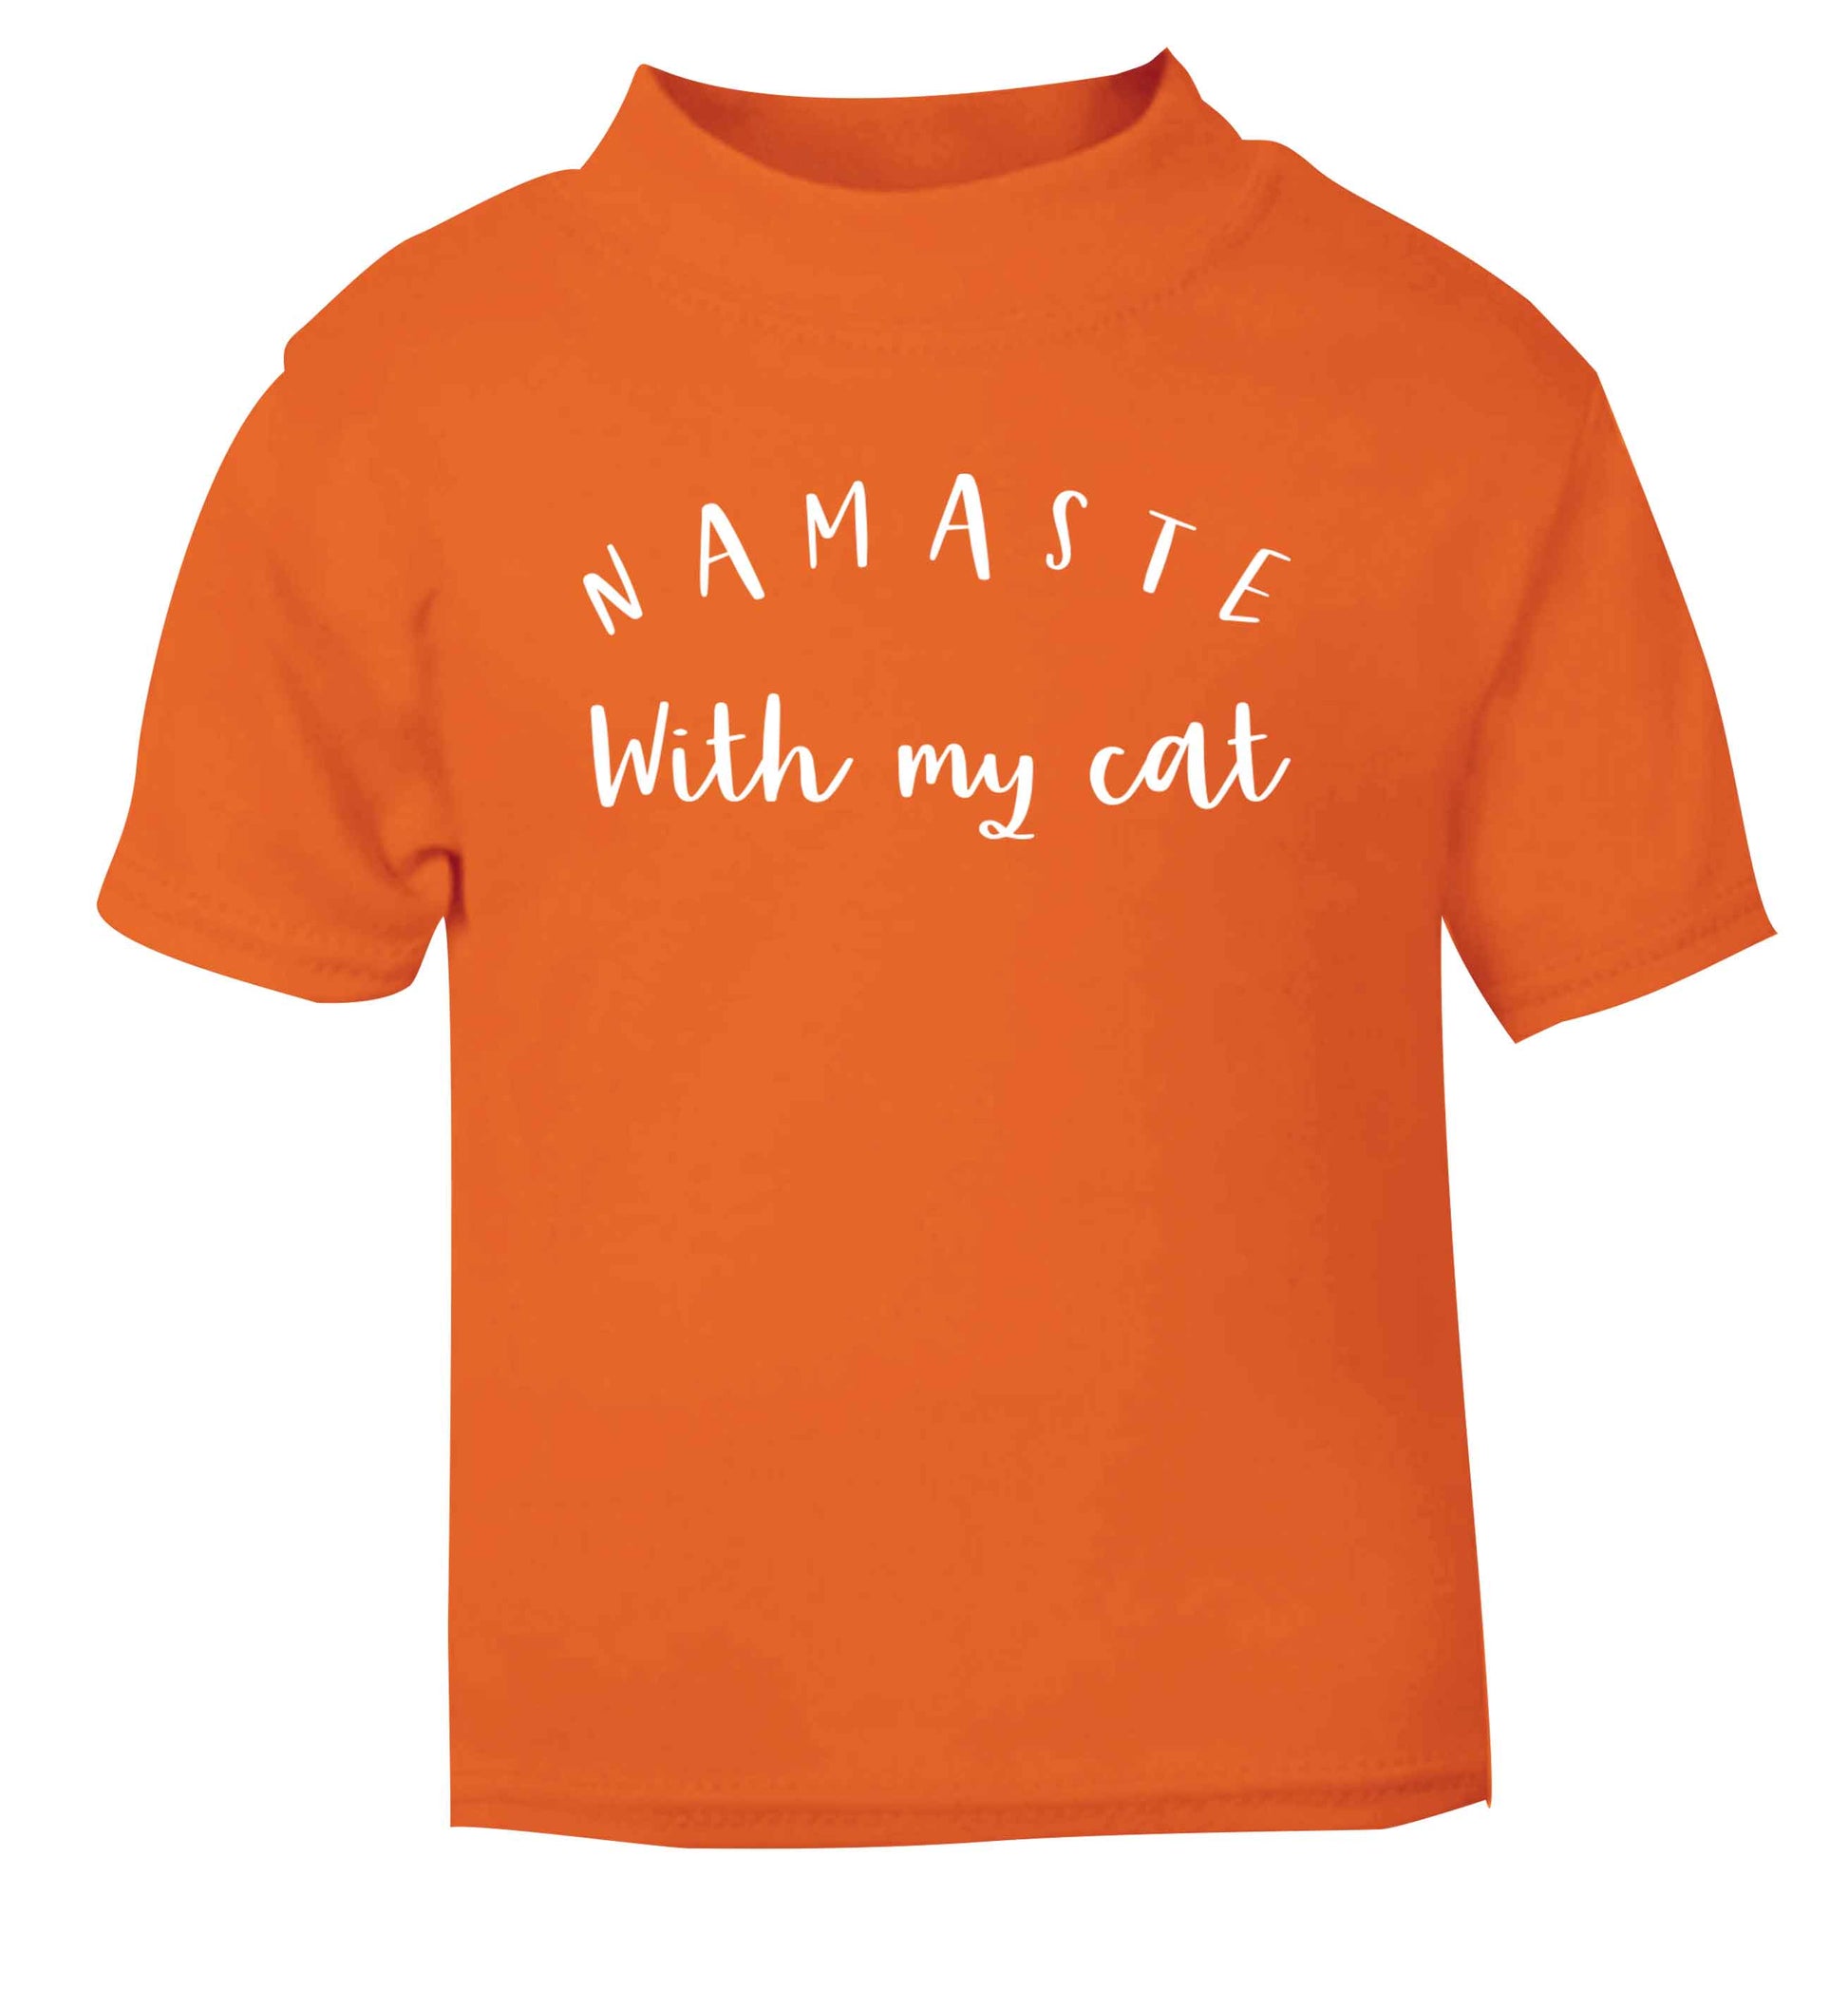 Namaste with my cat orange Baby Toddler Tshirt 2 Years